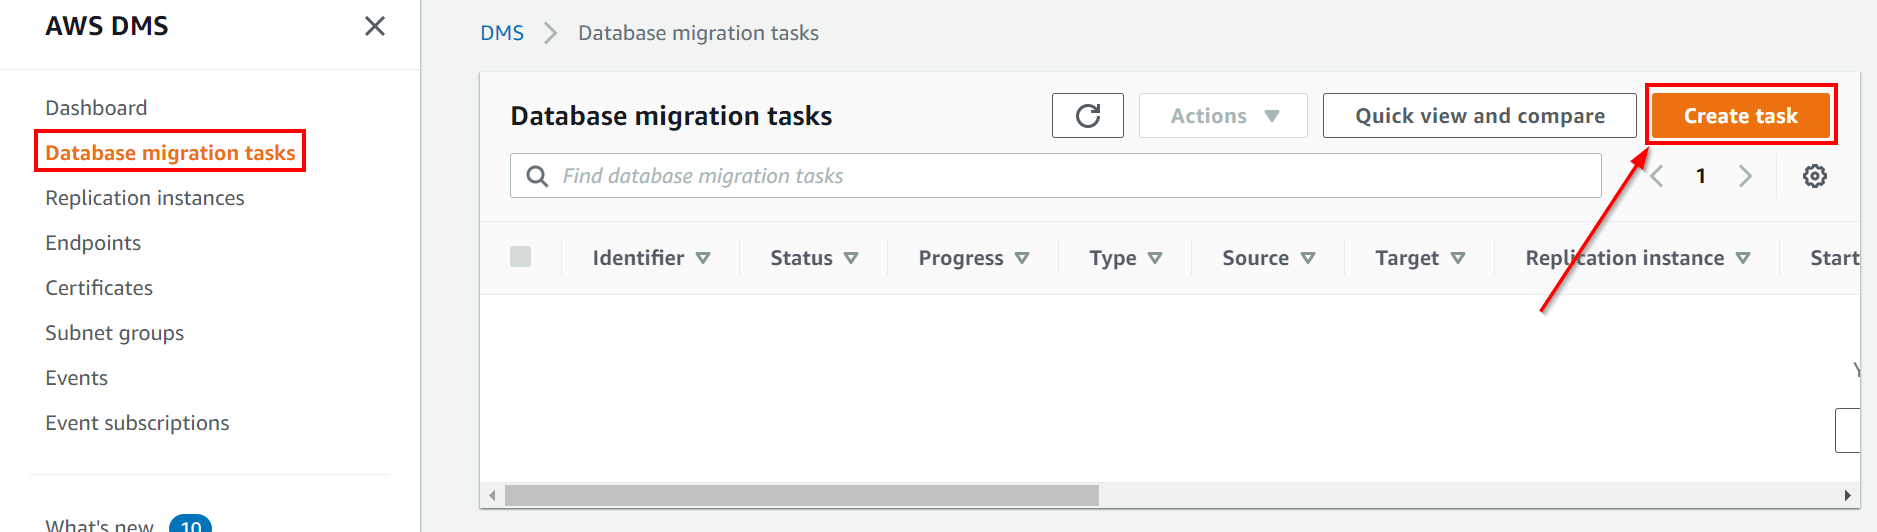 aws migration tasks